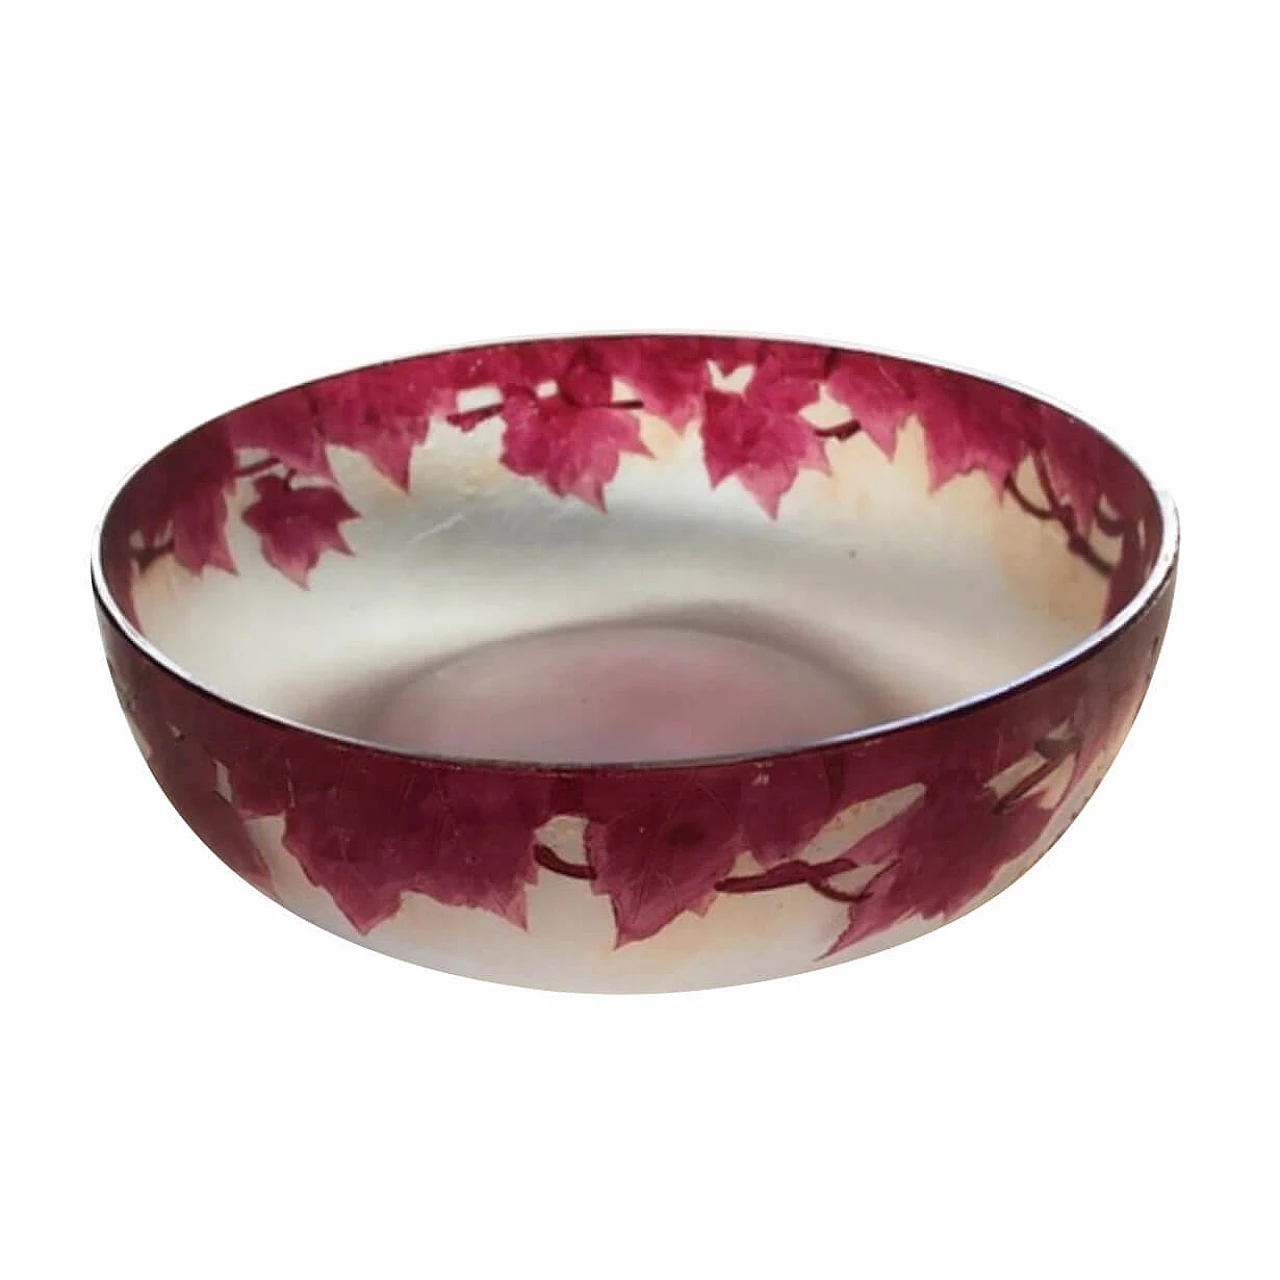 Cameo glass bowl from Legras Rubis series 1102403